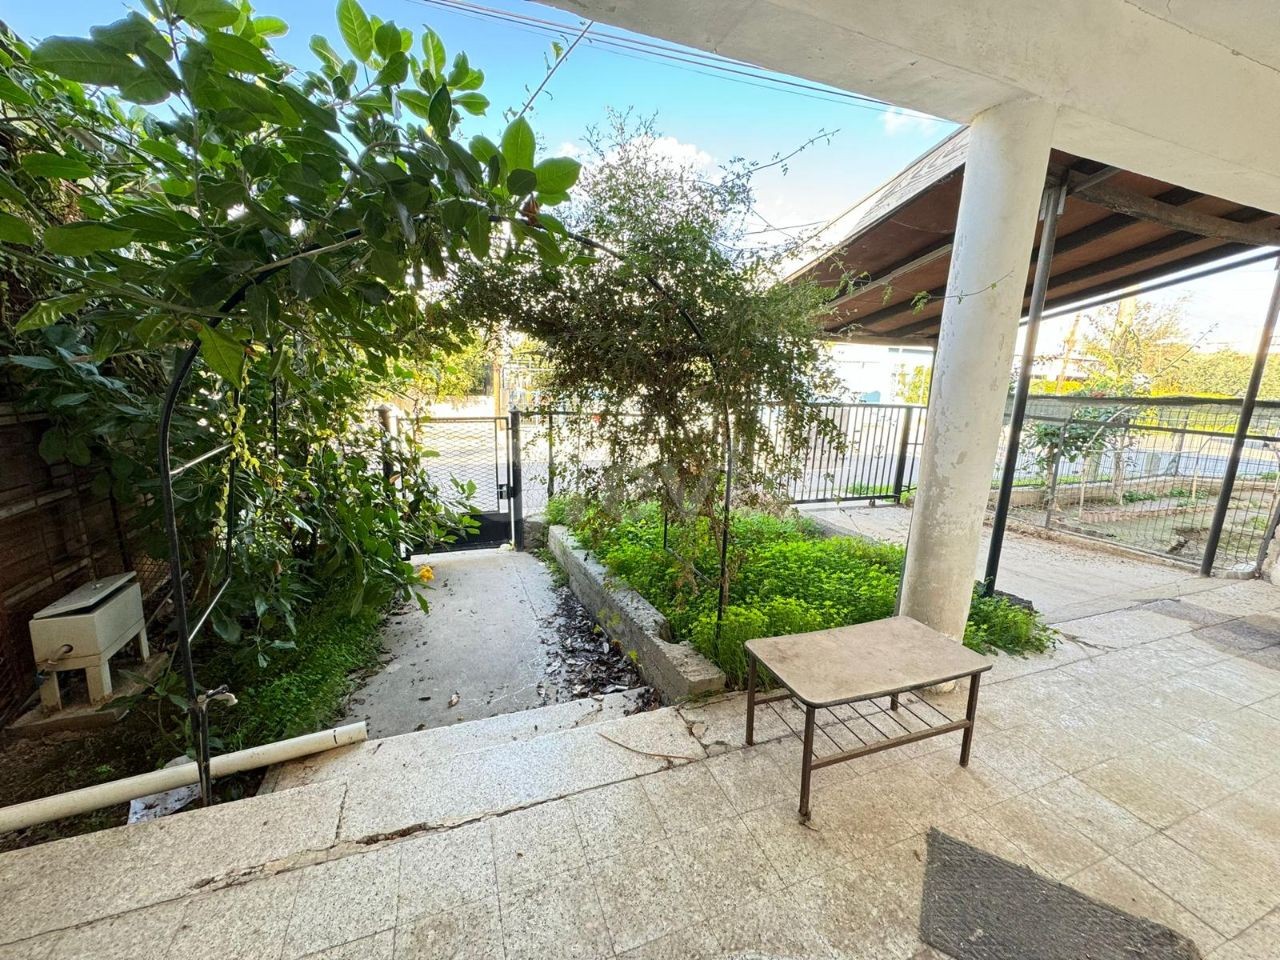 Single Storey Semi-Detached House with Commercial Permit on a 548 m2 Plot in Nicosia Marmara Region!